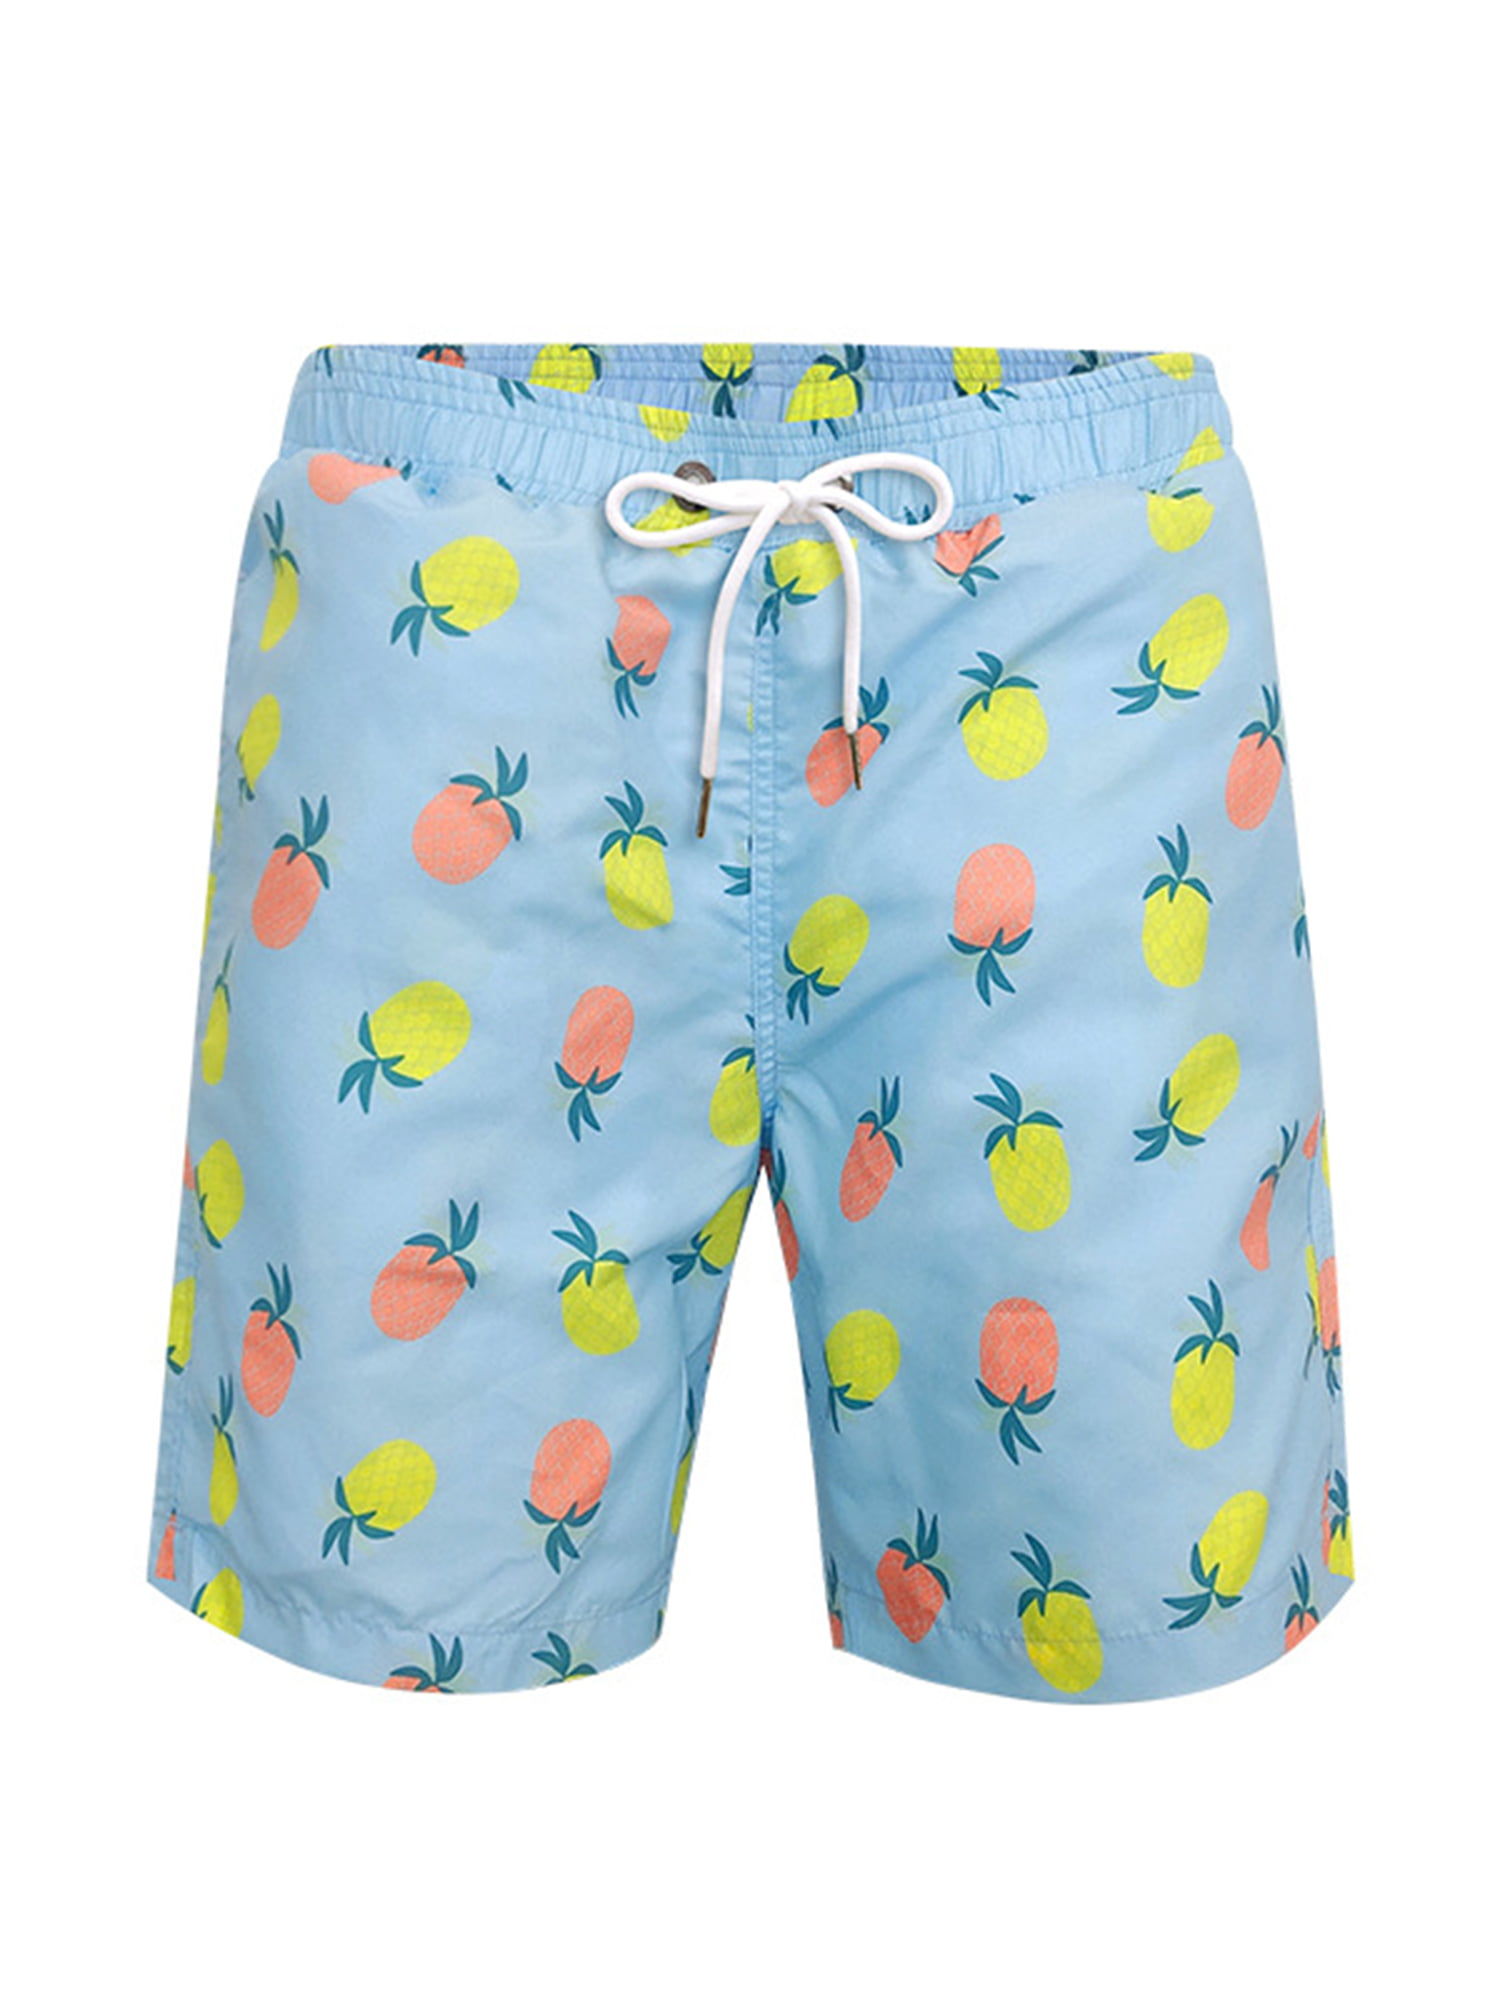 mens HOM  swimming trunks shorts beach fun marine chic mini briefs budgie 